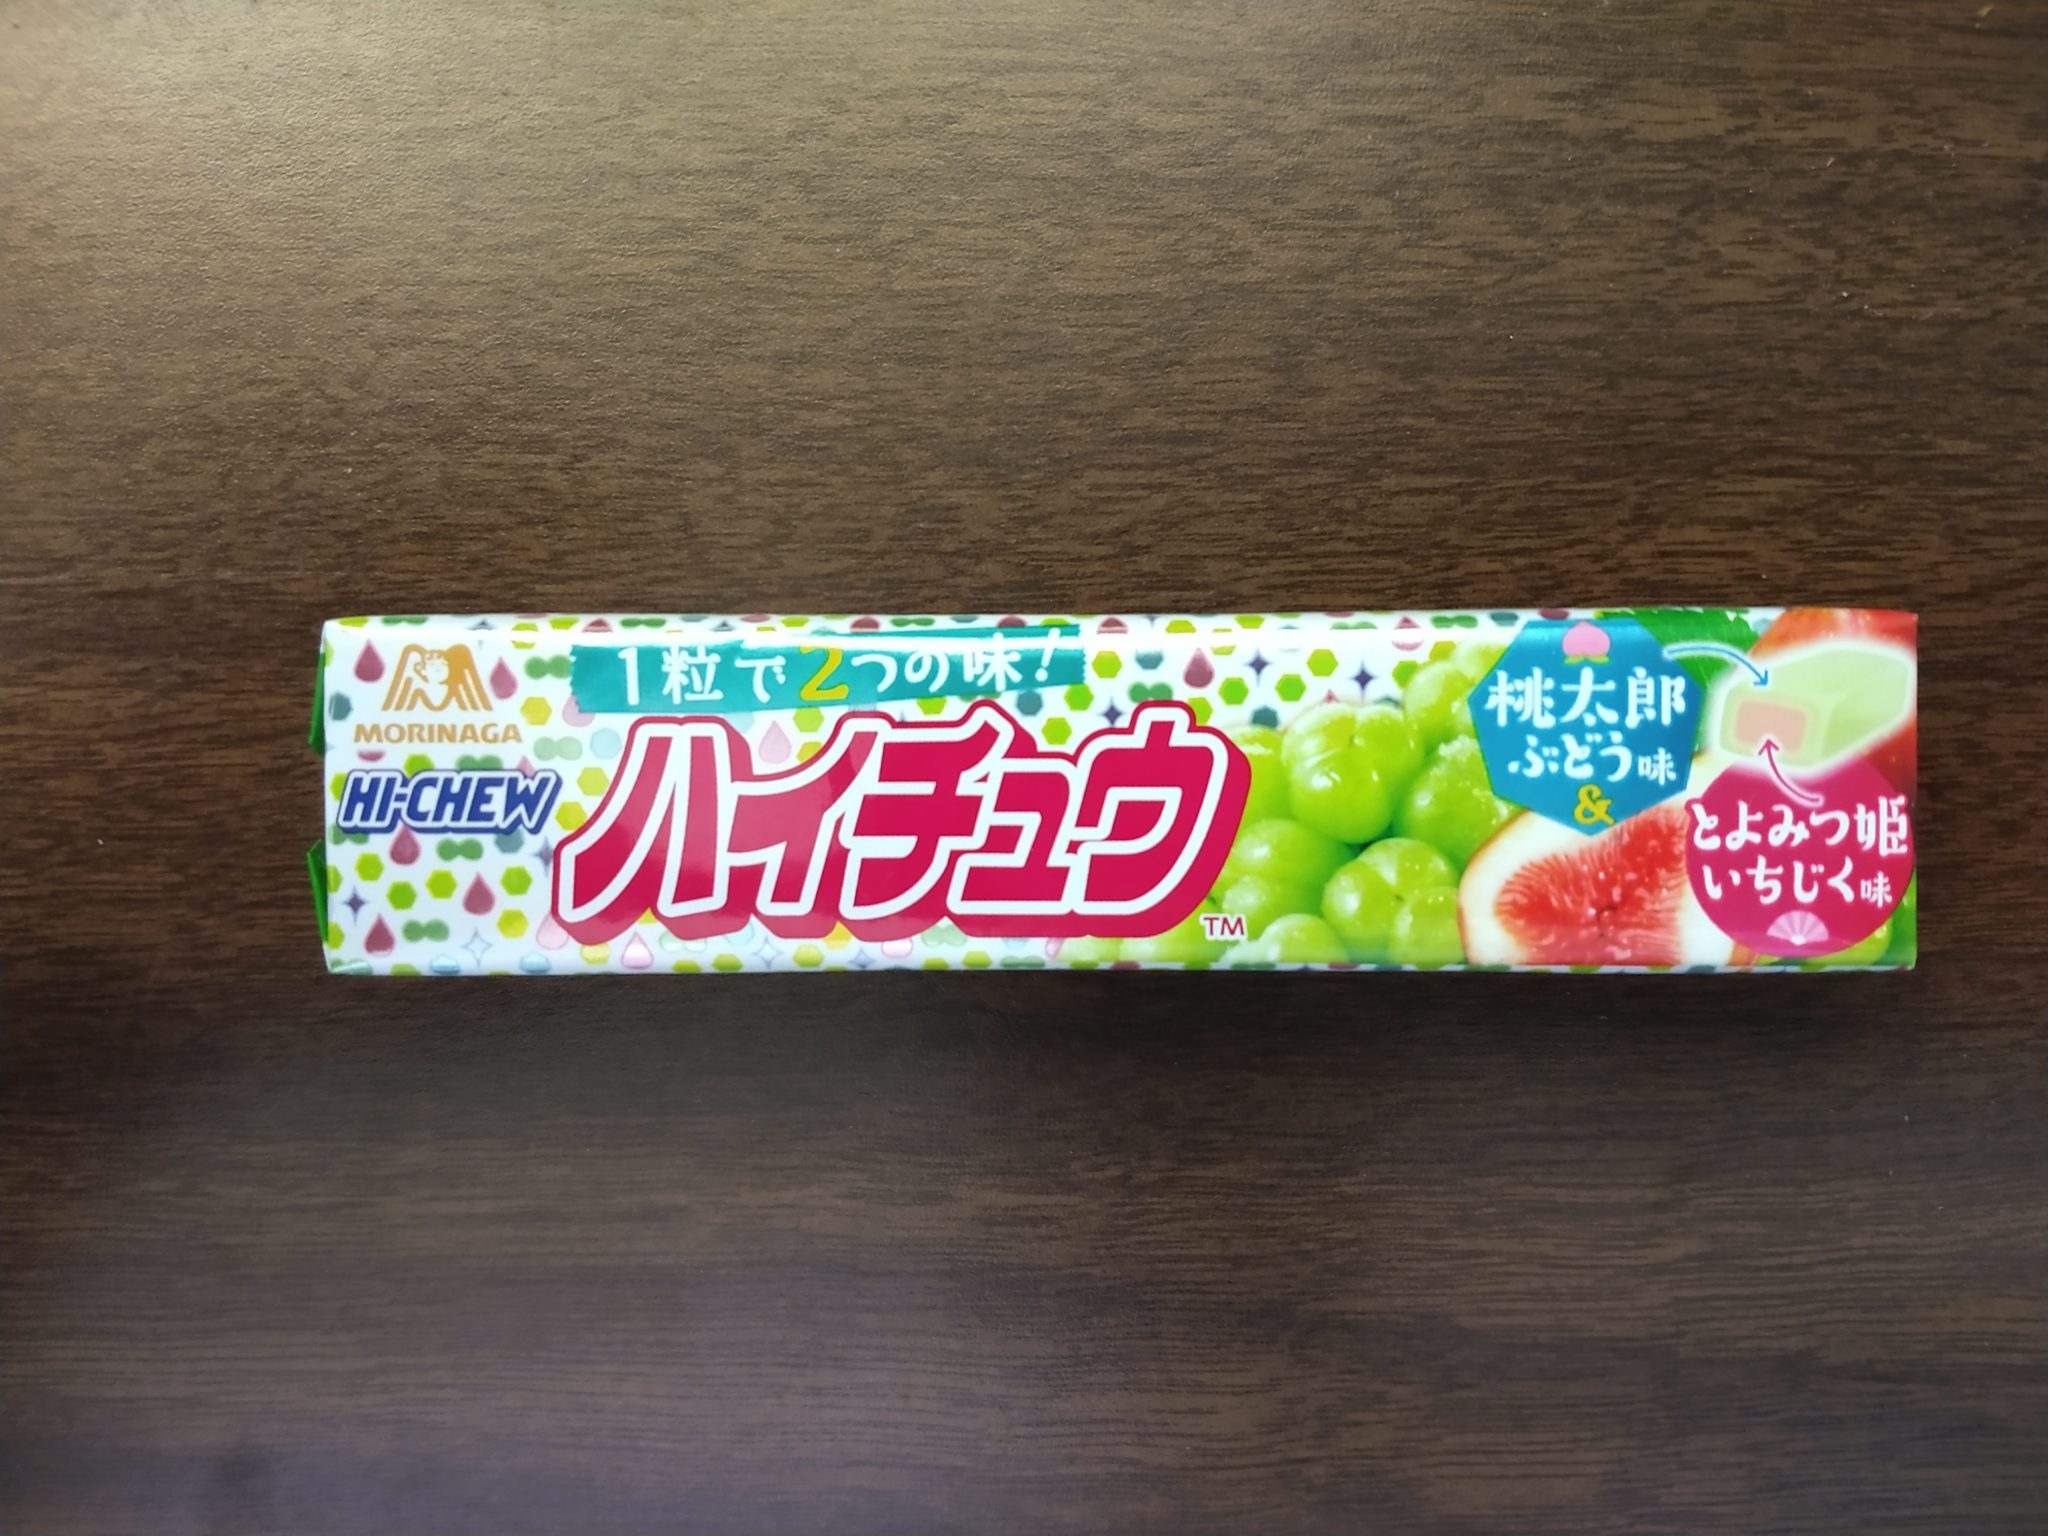 Hi-Chew Doubles – Fig & Momotaro Grape